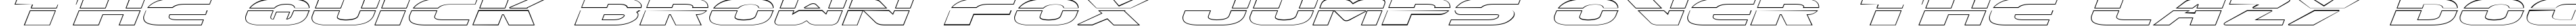 Пример написания шрифтом Expanded текста на английском